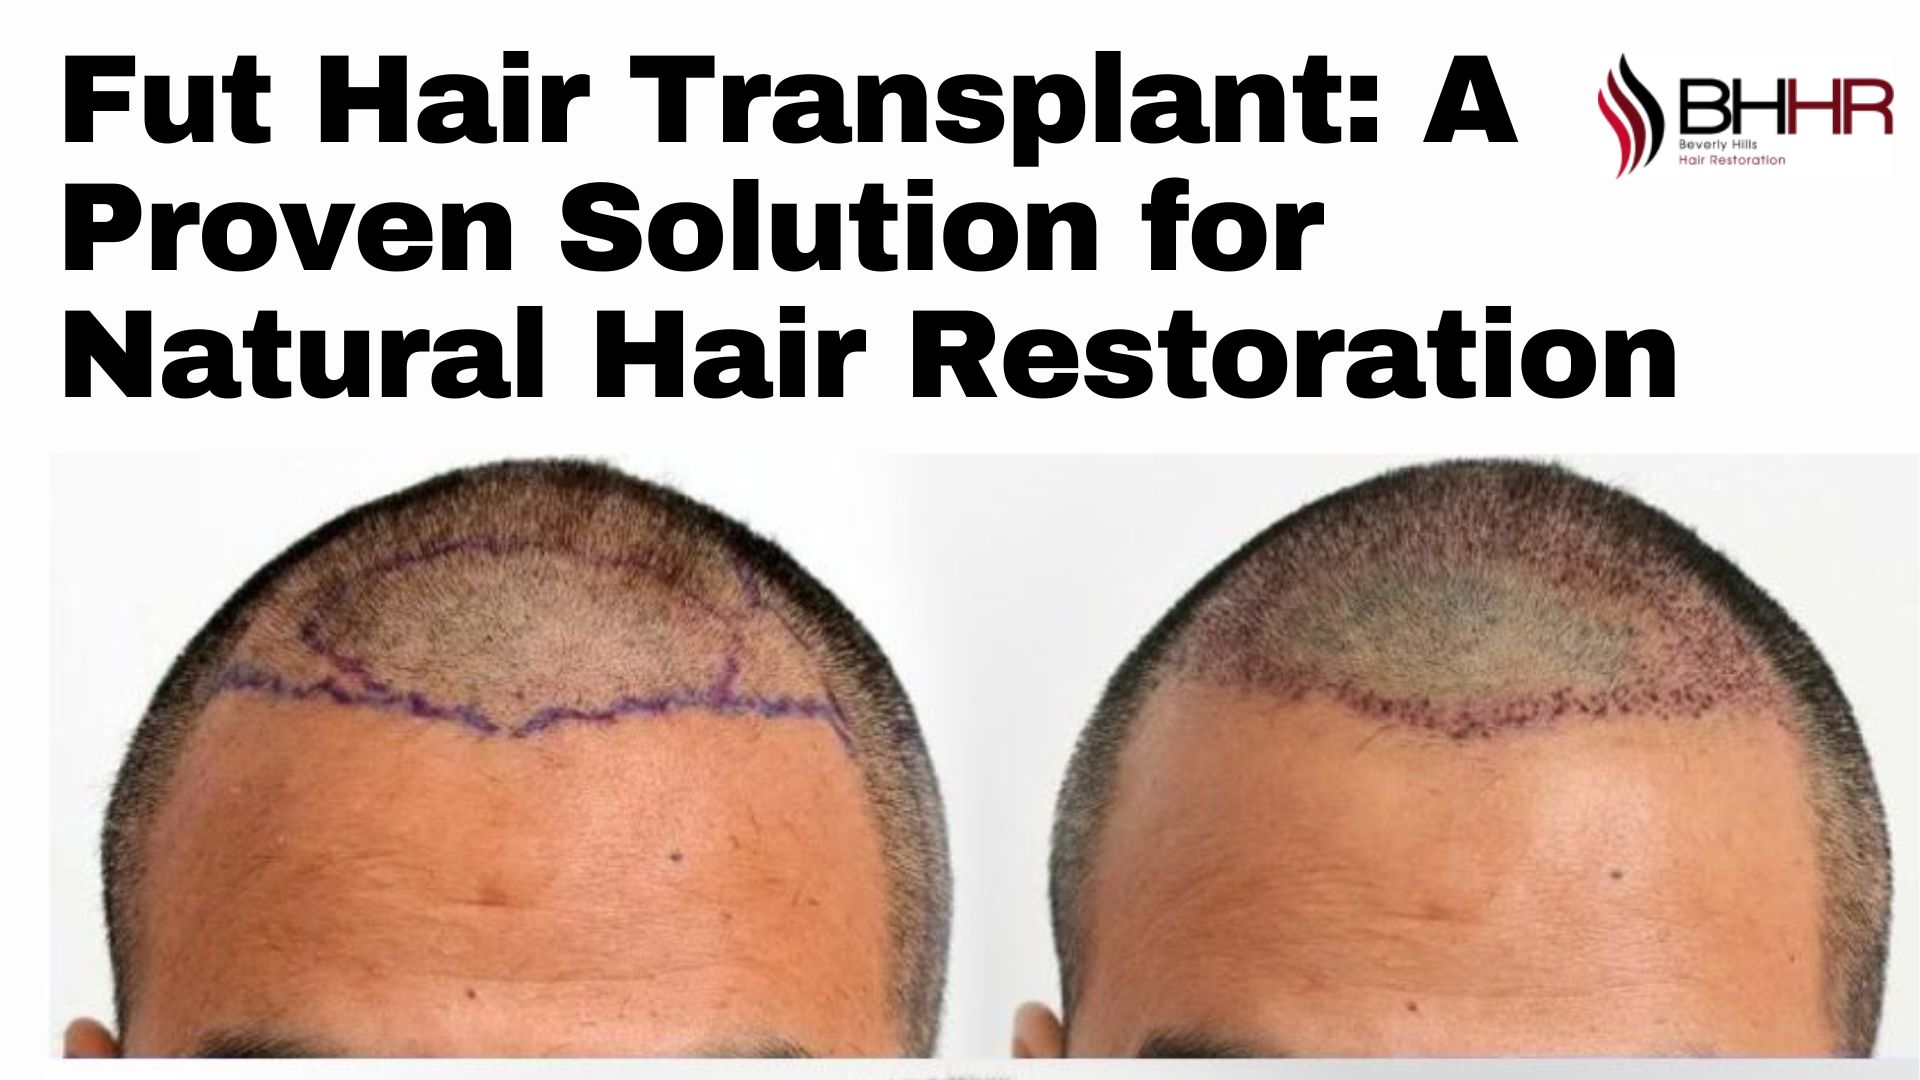 Fut hair transplant BHHR